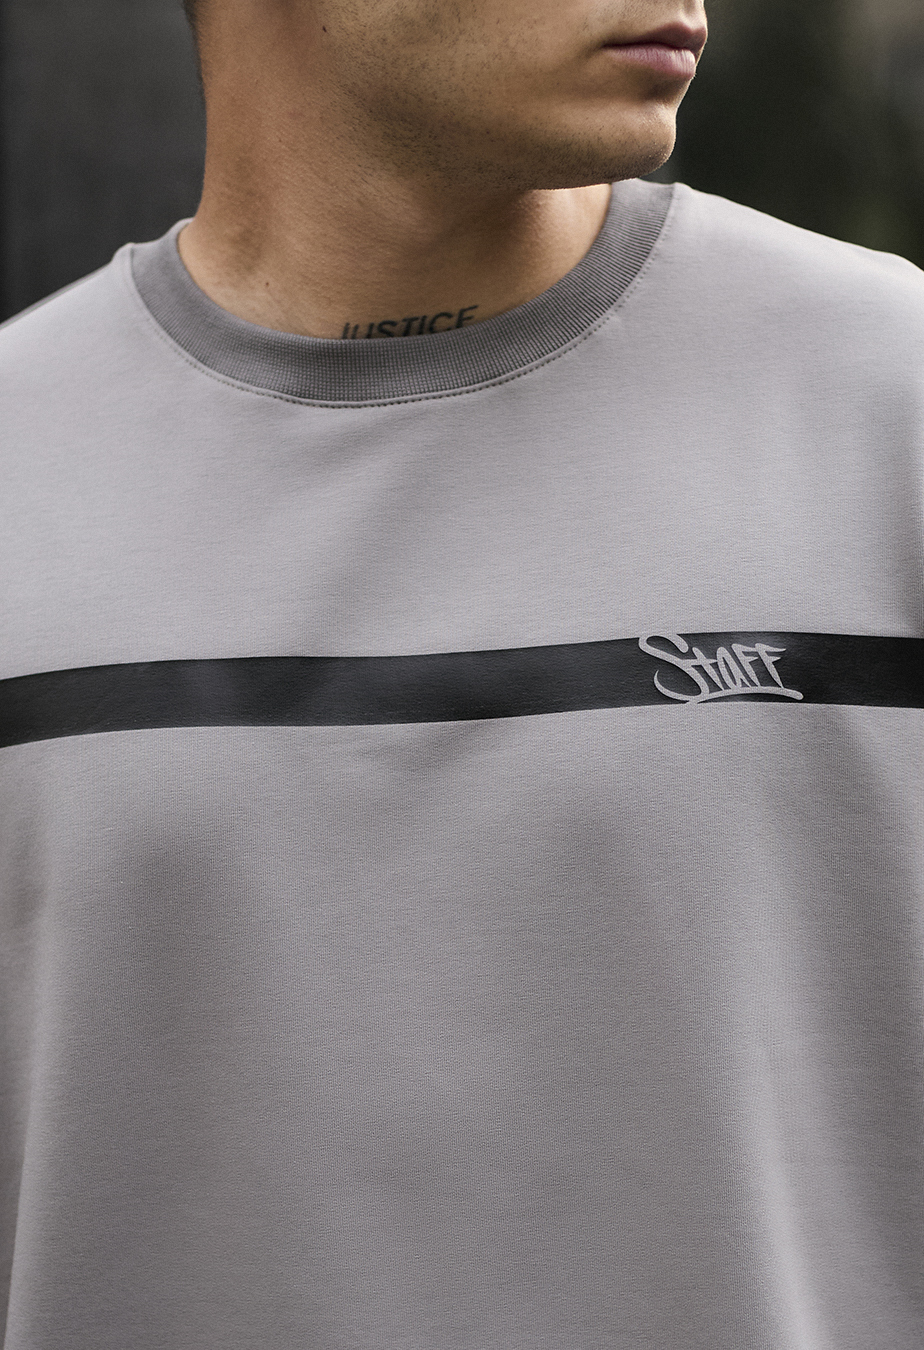 Letni komplet: koszulka + szorty Staff ra gray oversize